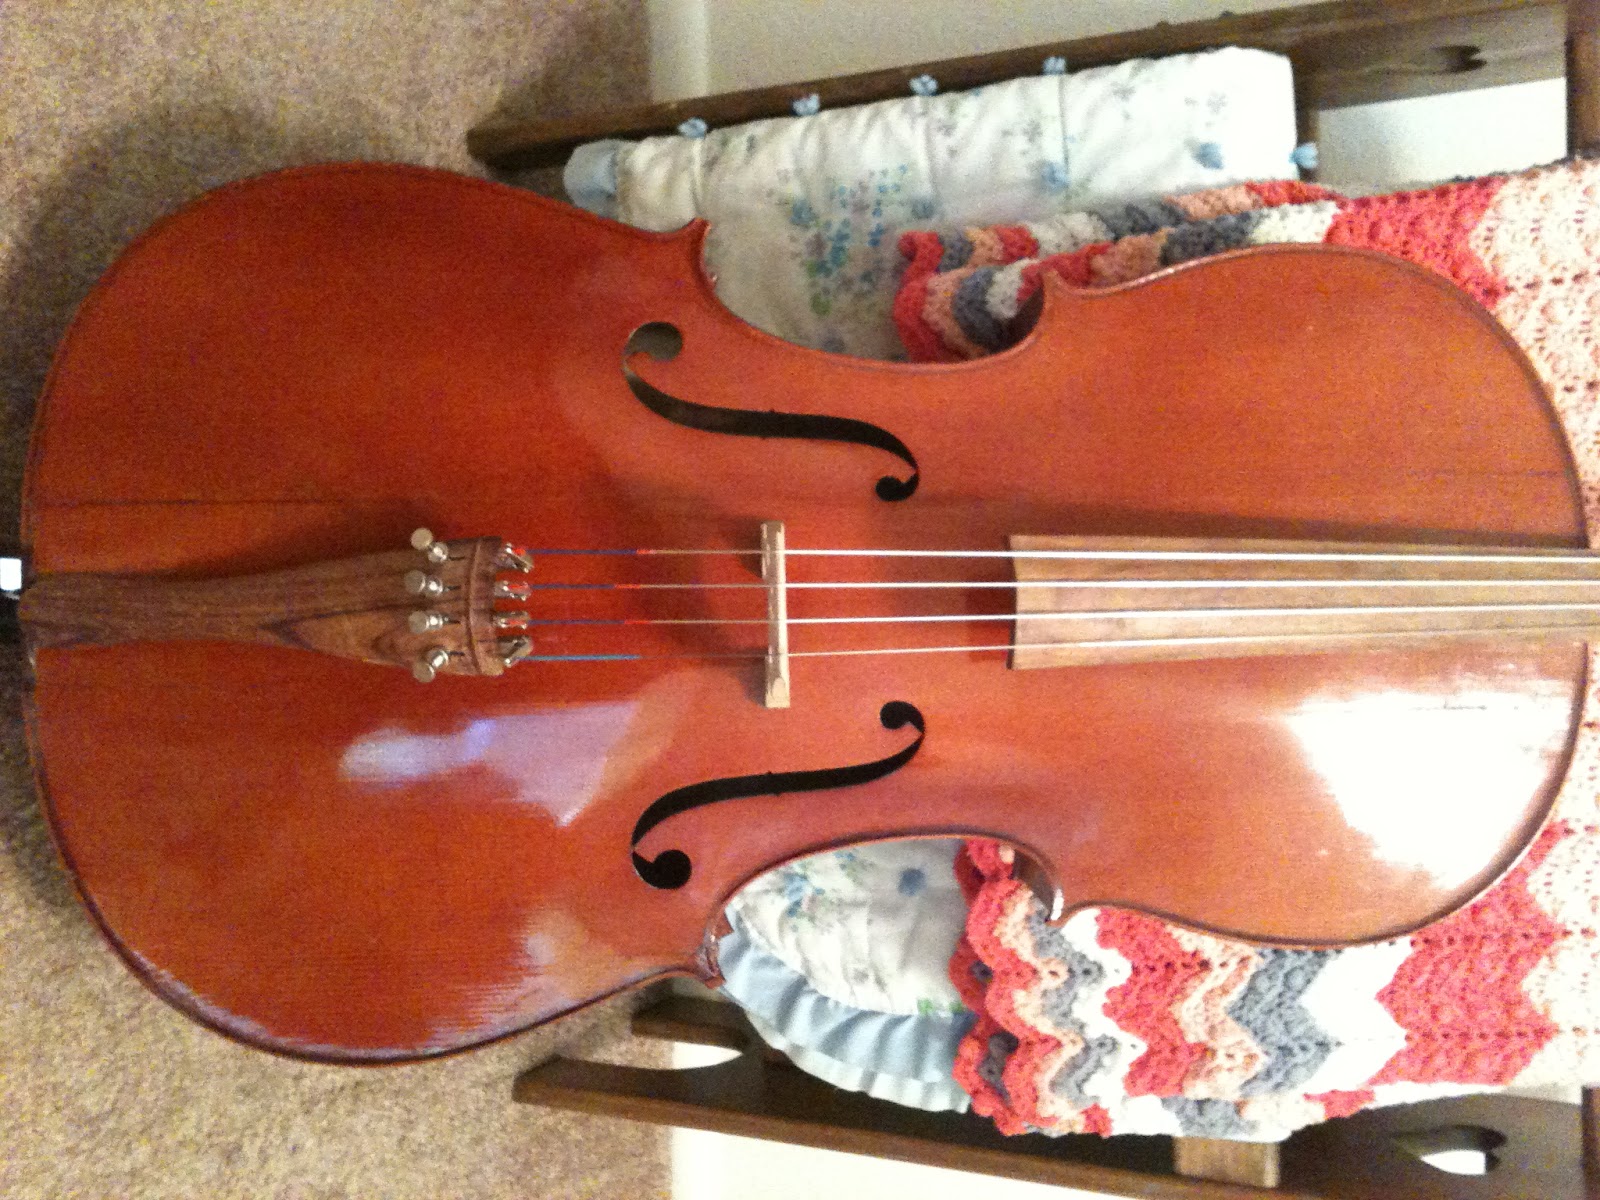 A New Day: My Cello